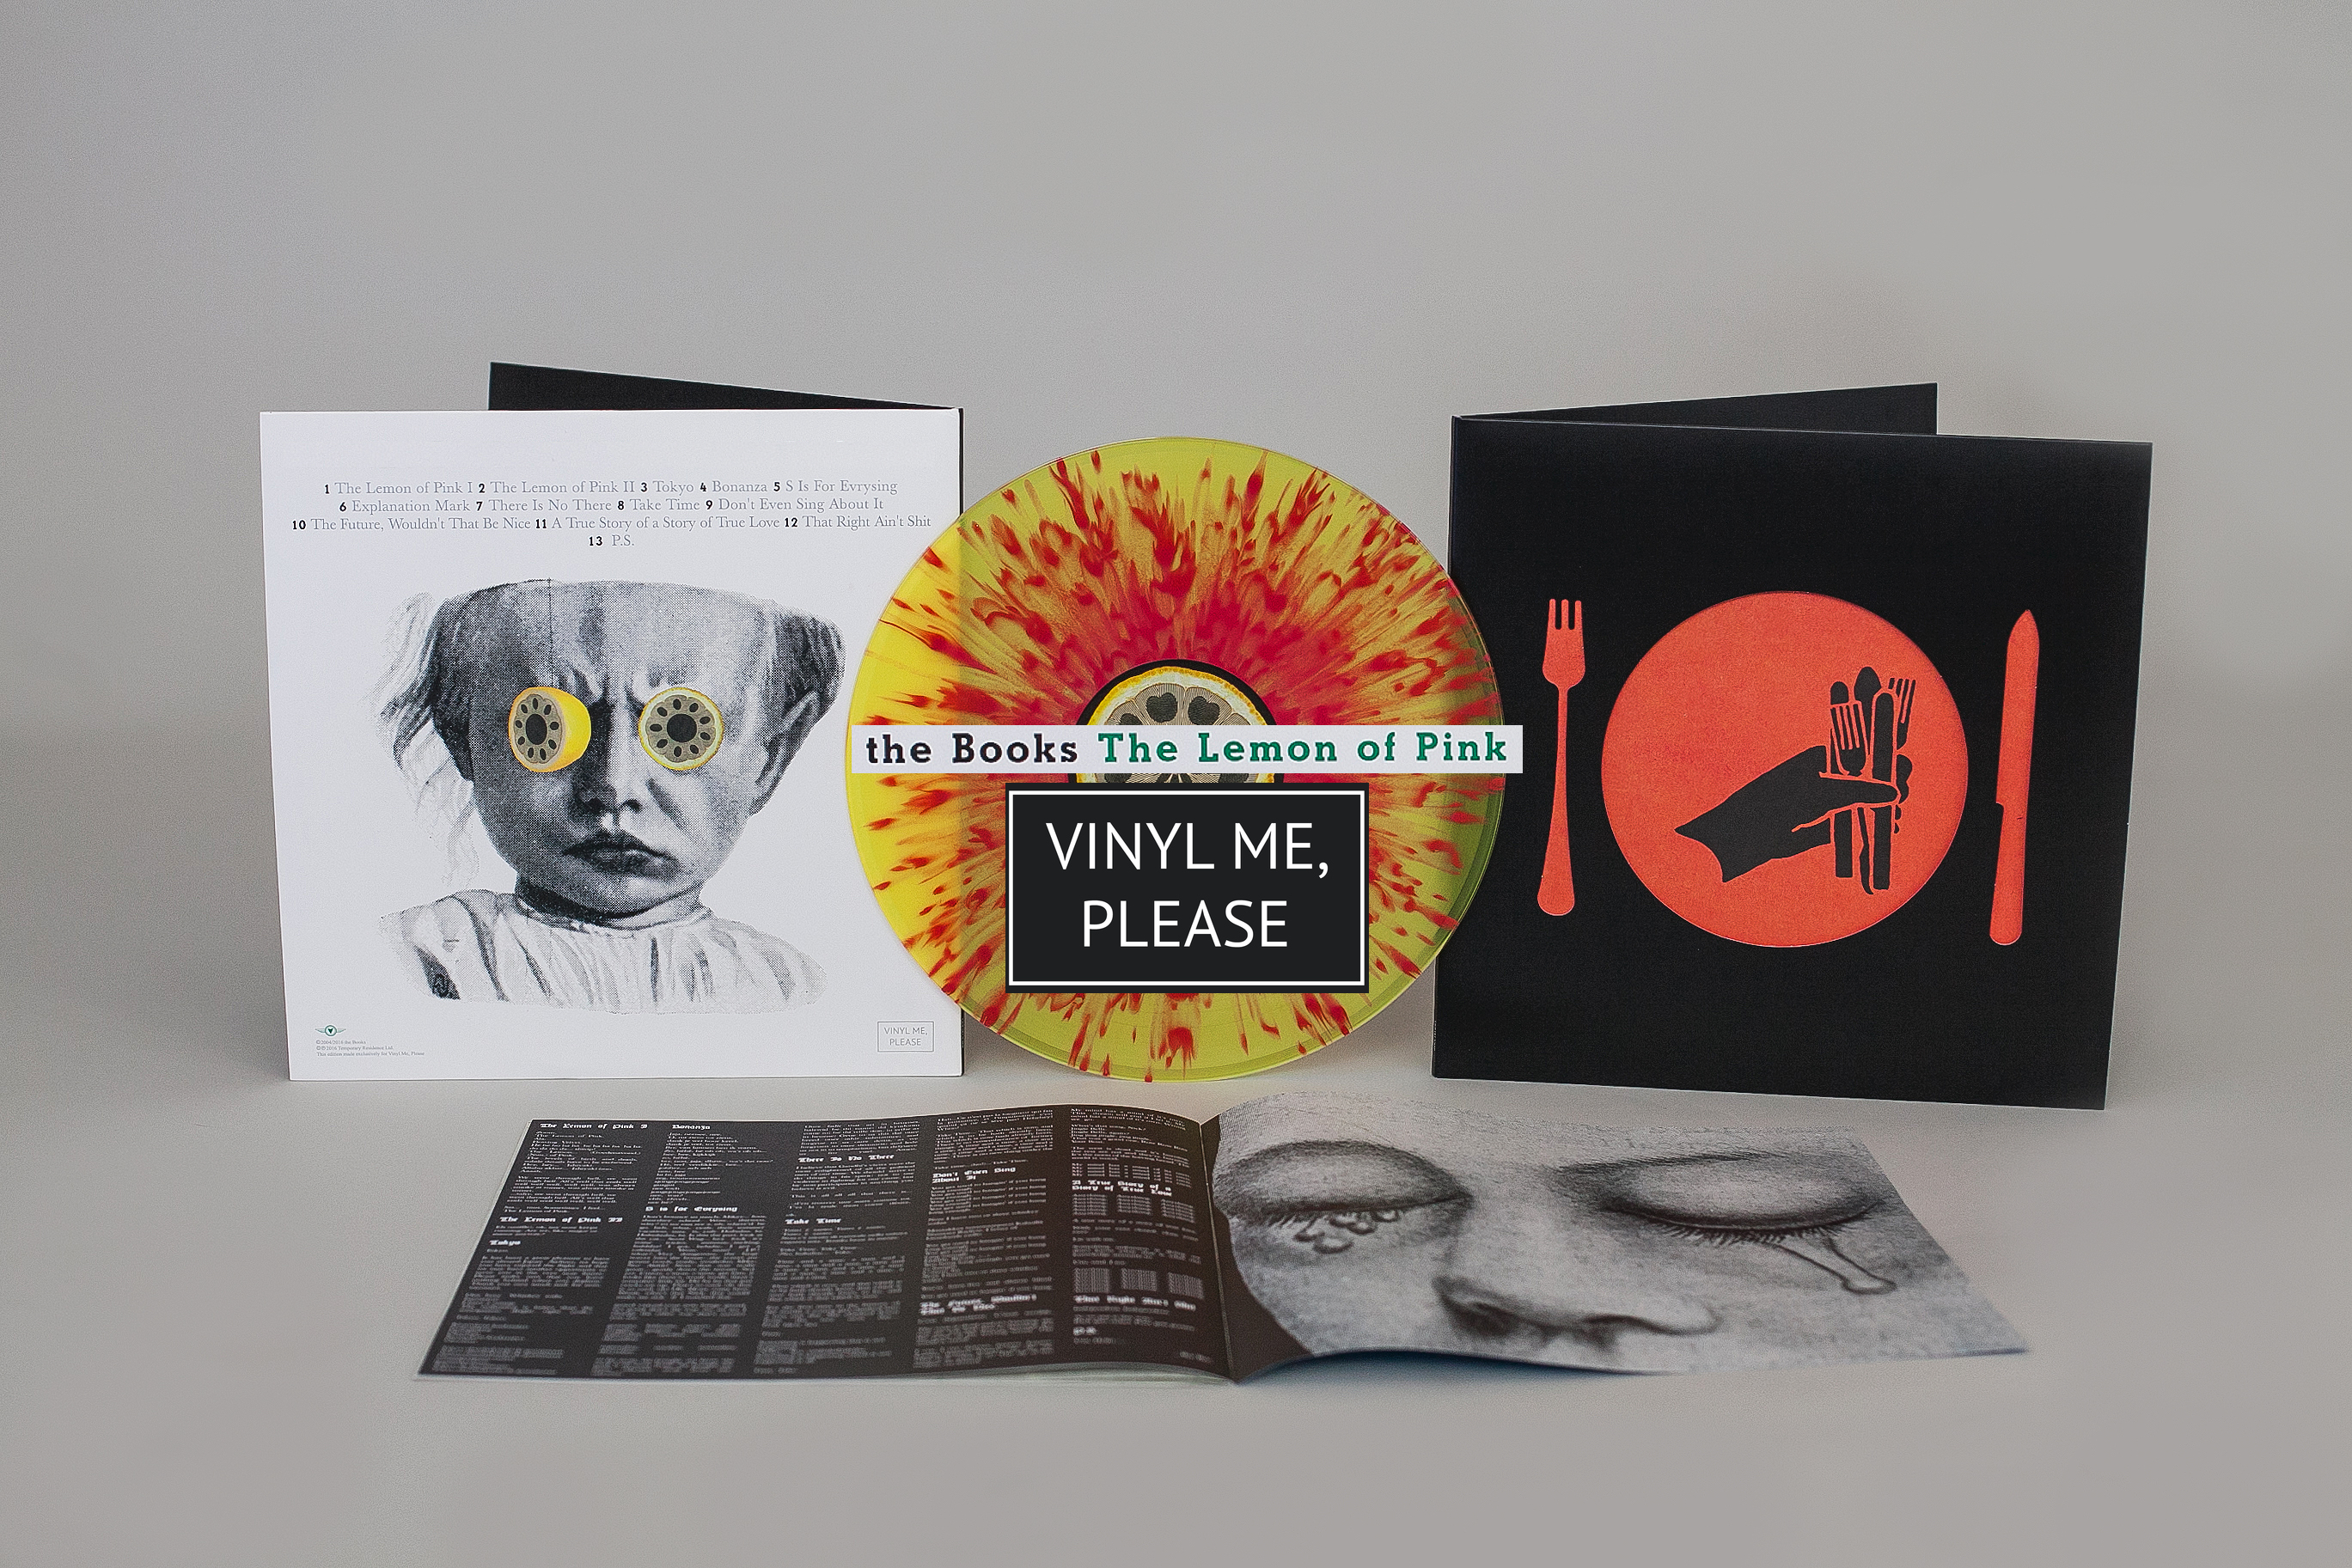 Vinyl me, please november edition: the books – ‘the lemon of pink’